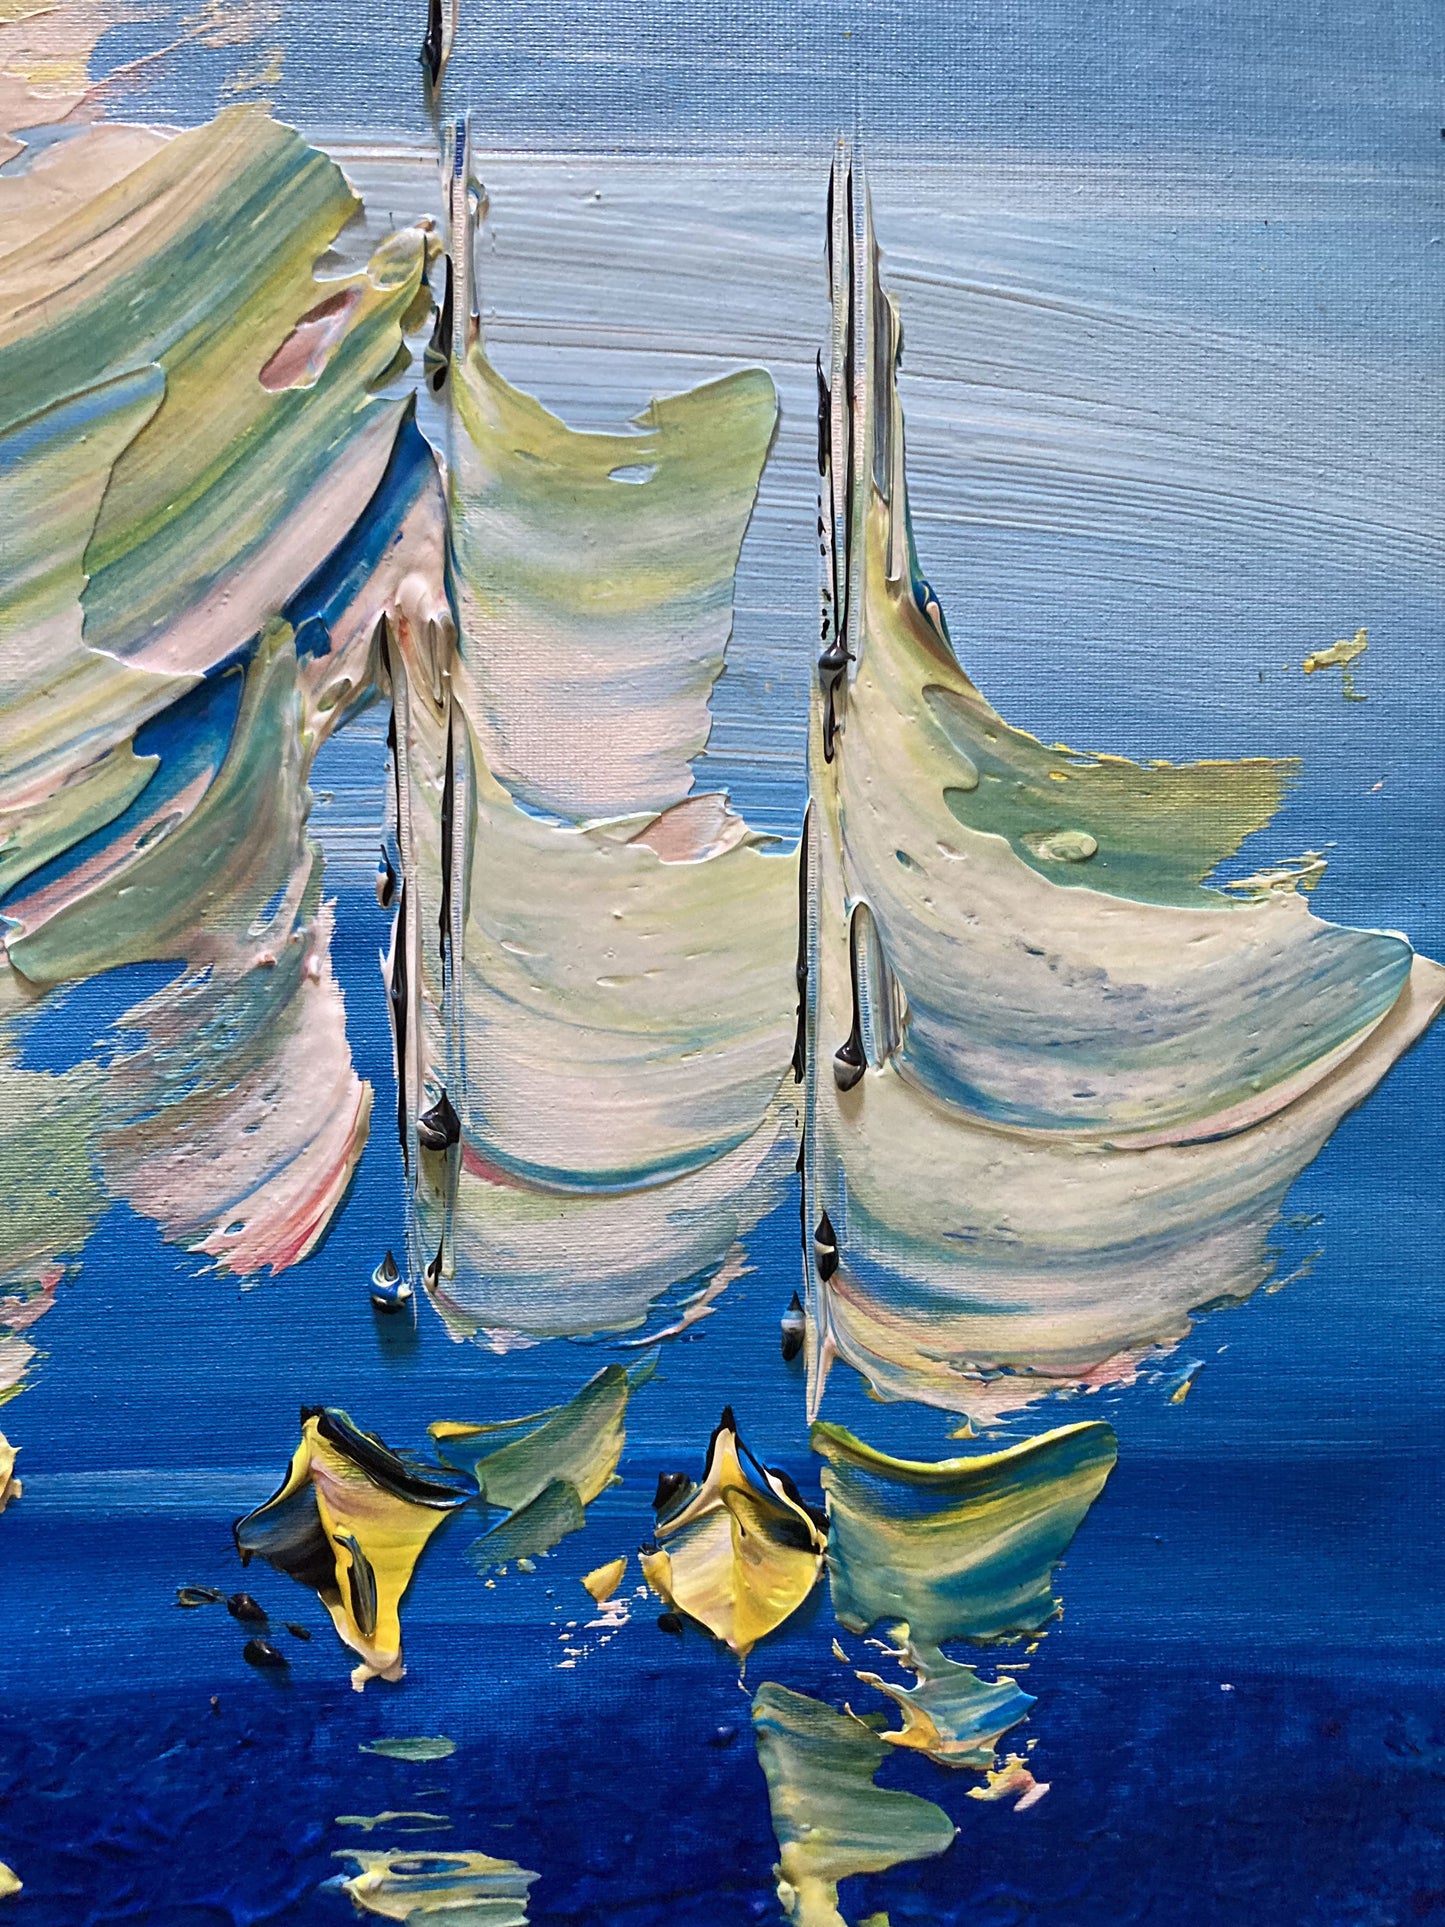 Tableau Marine voiliers peinture sur toile 30x60 detail4 virginie Linard ©